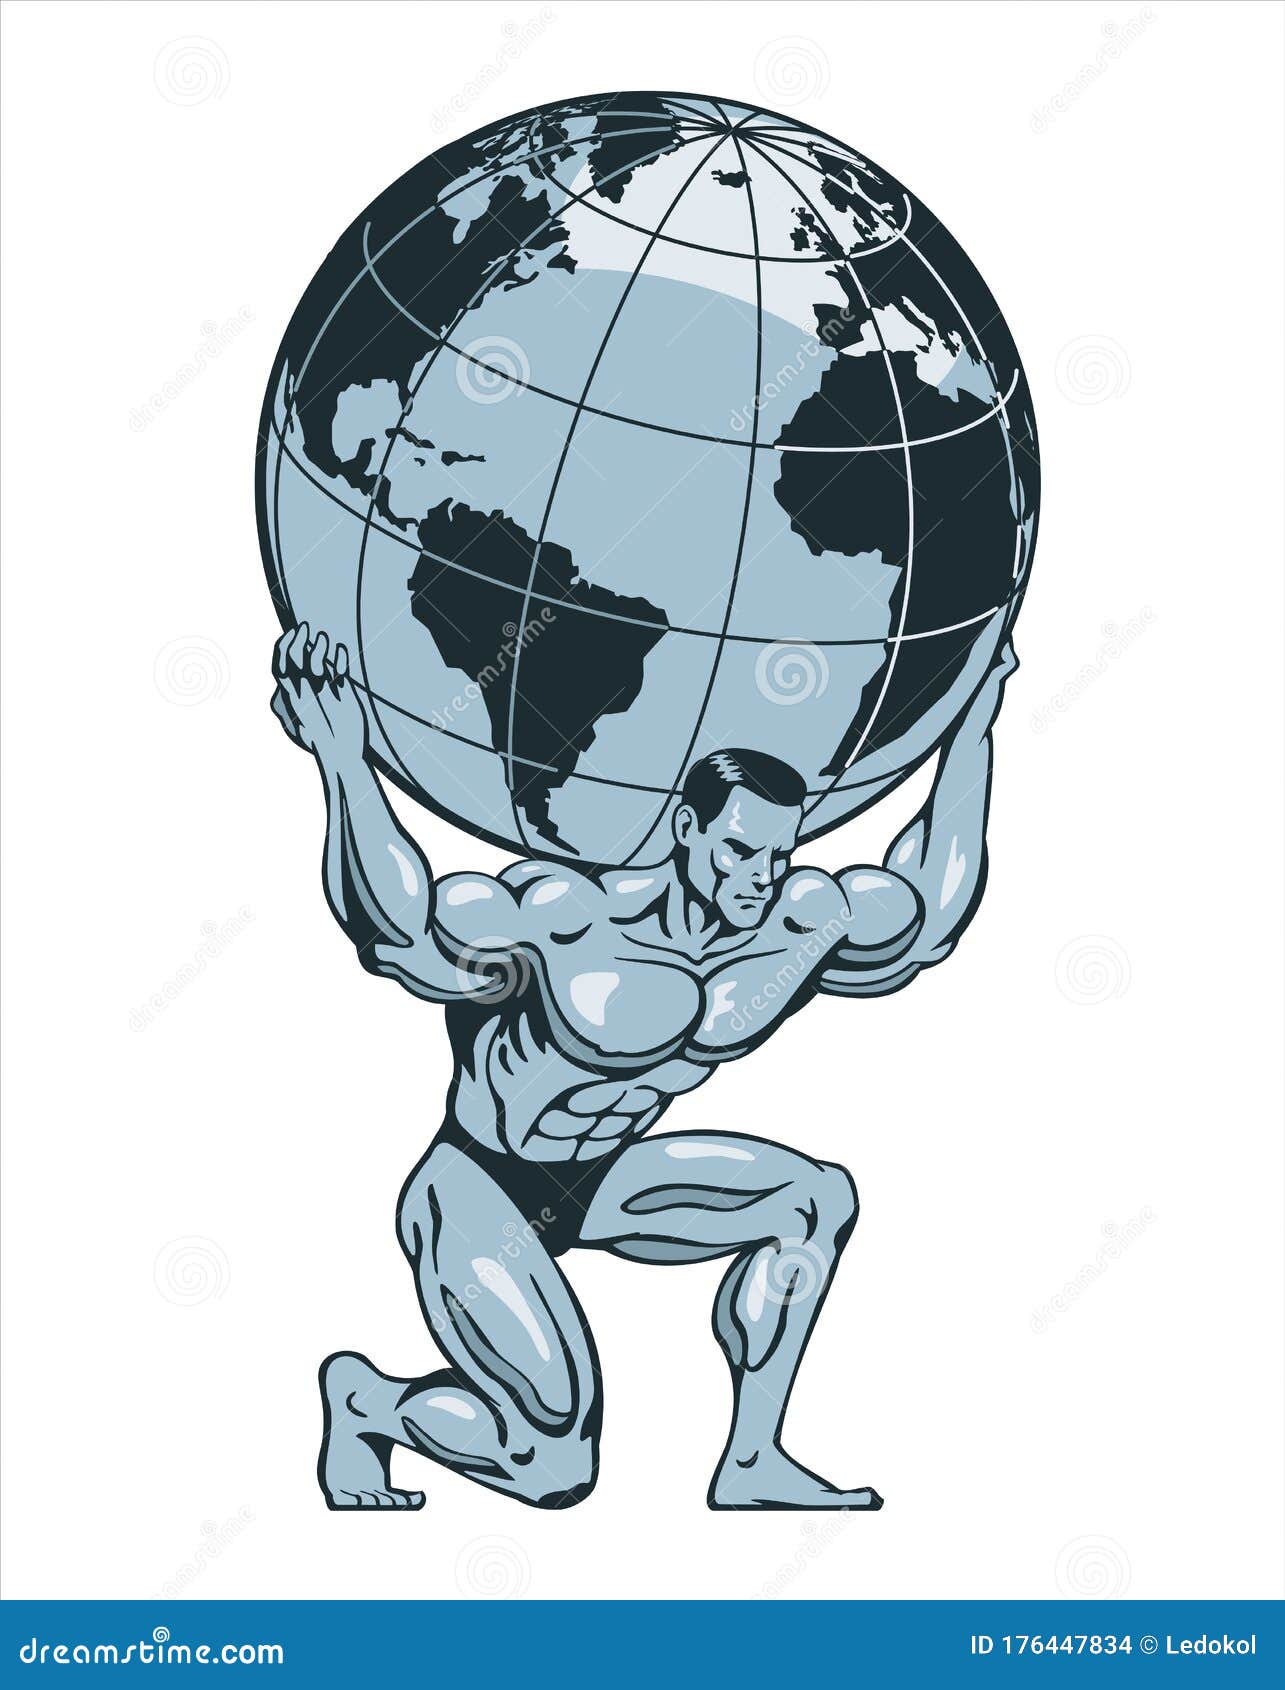 atlas or titan kneeling carrying lifting globe world earth on his back. bodybuilder.  